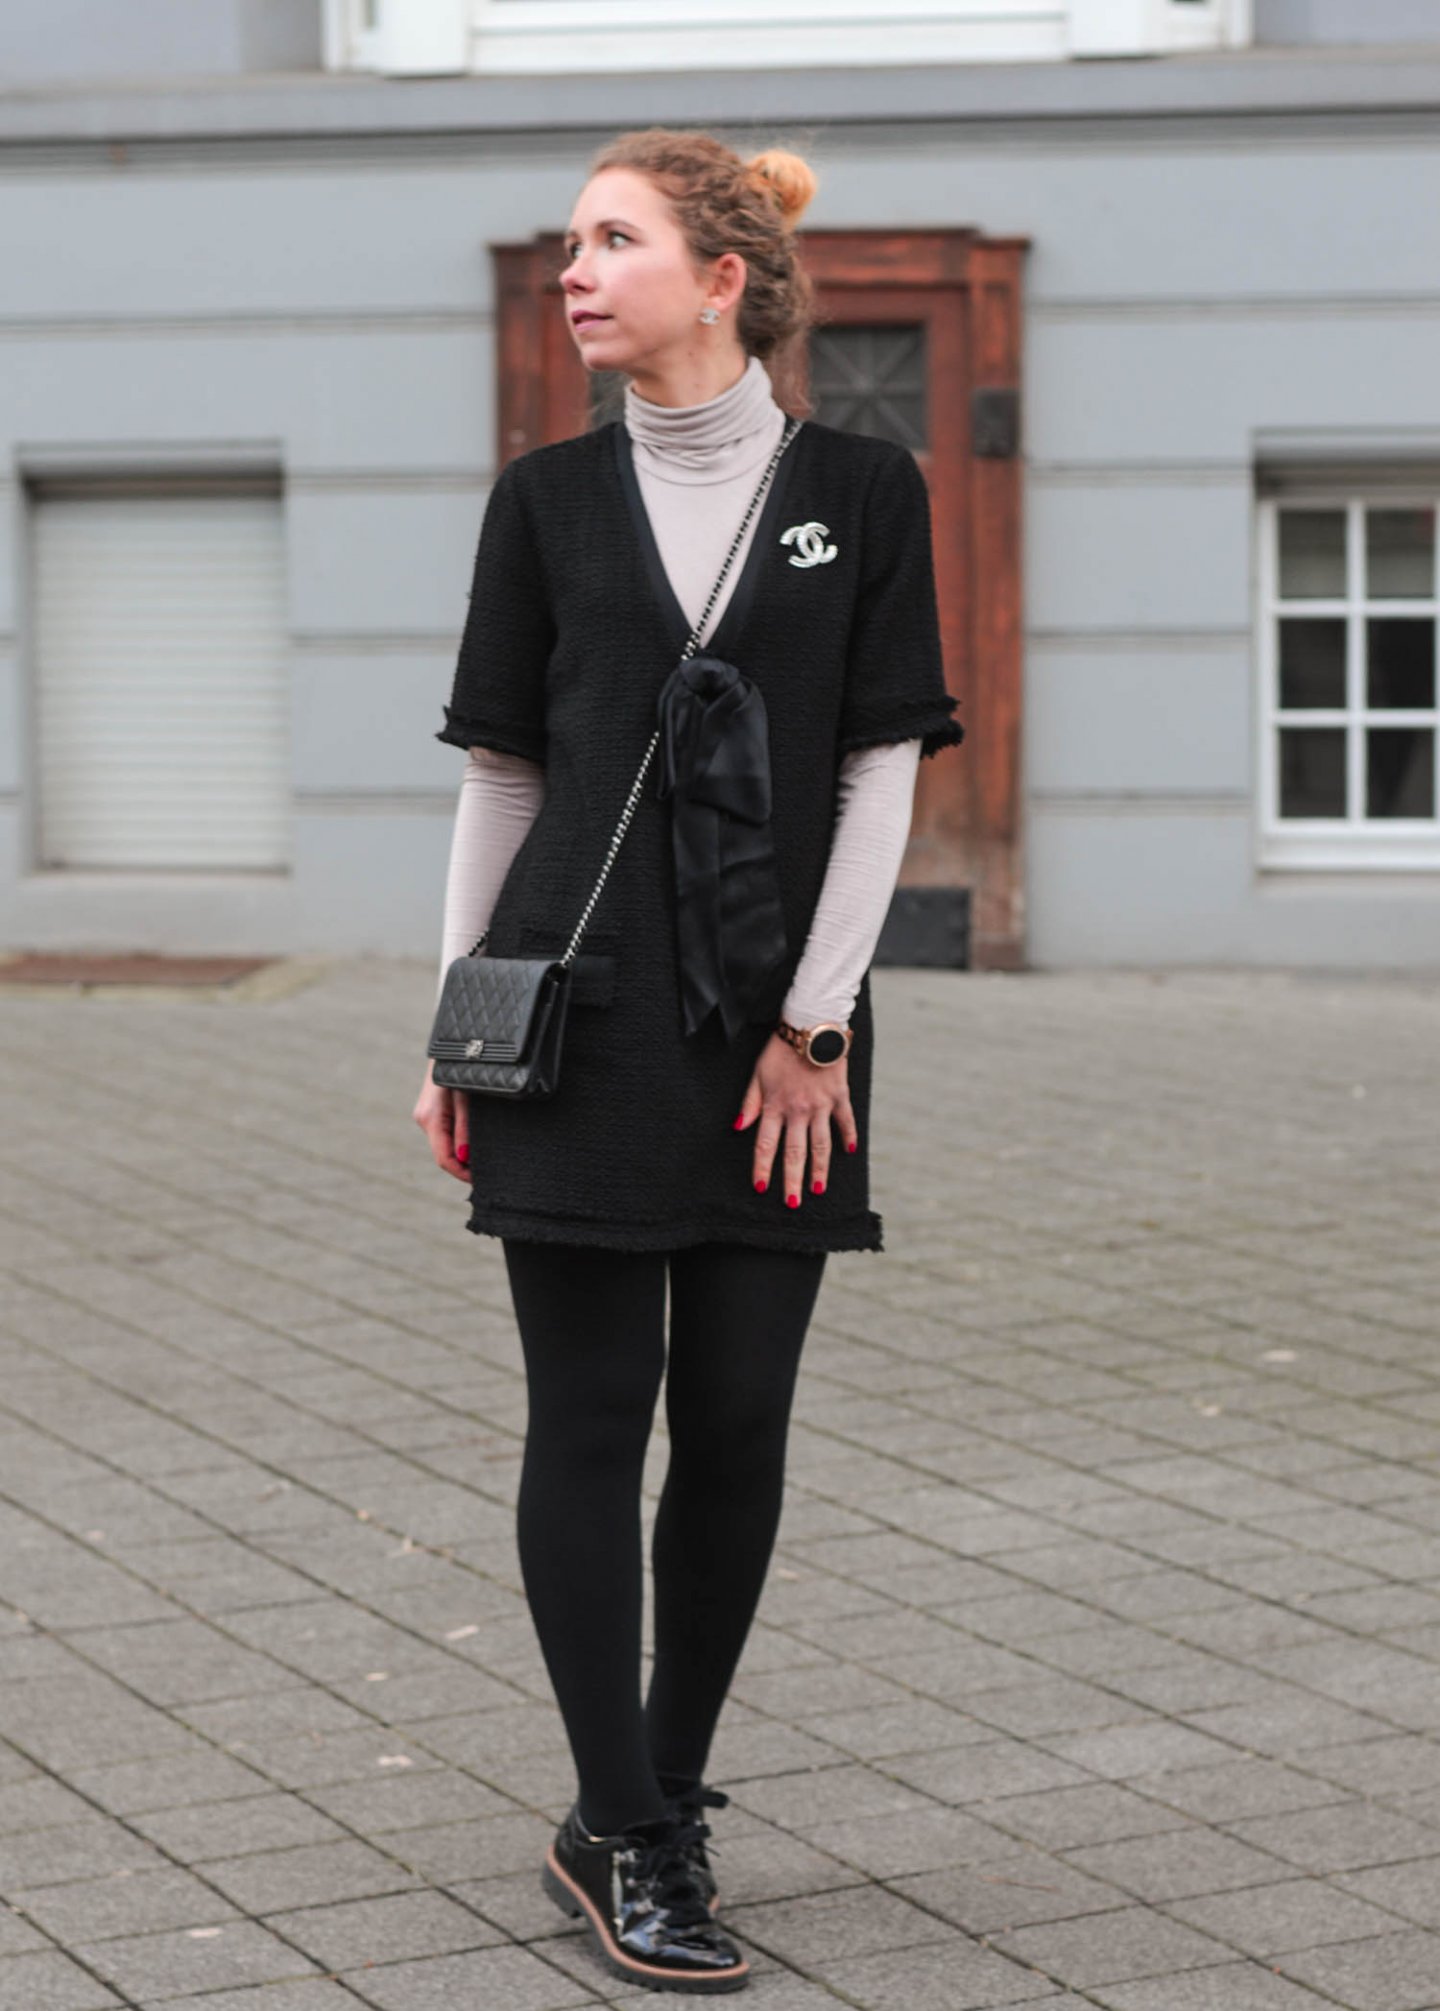 Tweed-Dress-Zara-Chanel-Accessoires-Kationette-Fashionblog-Germany